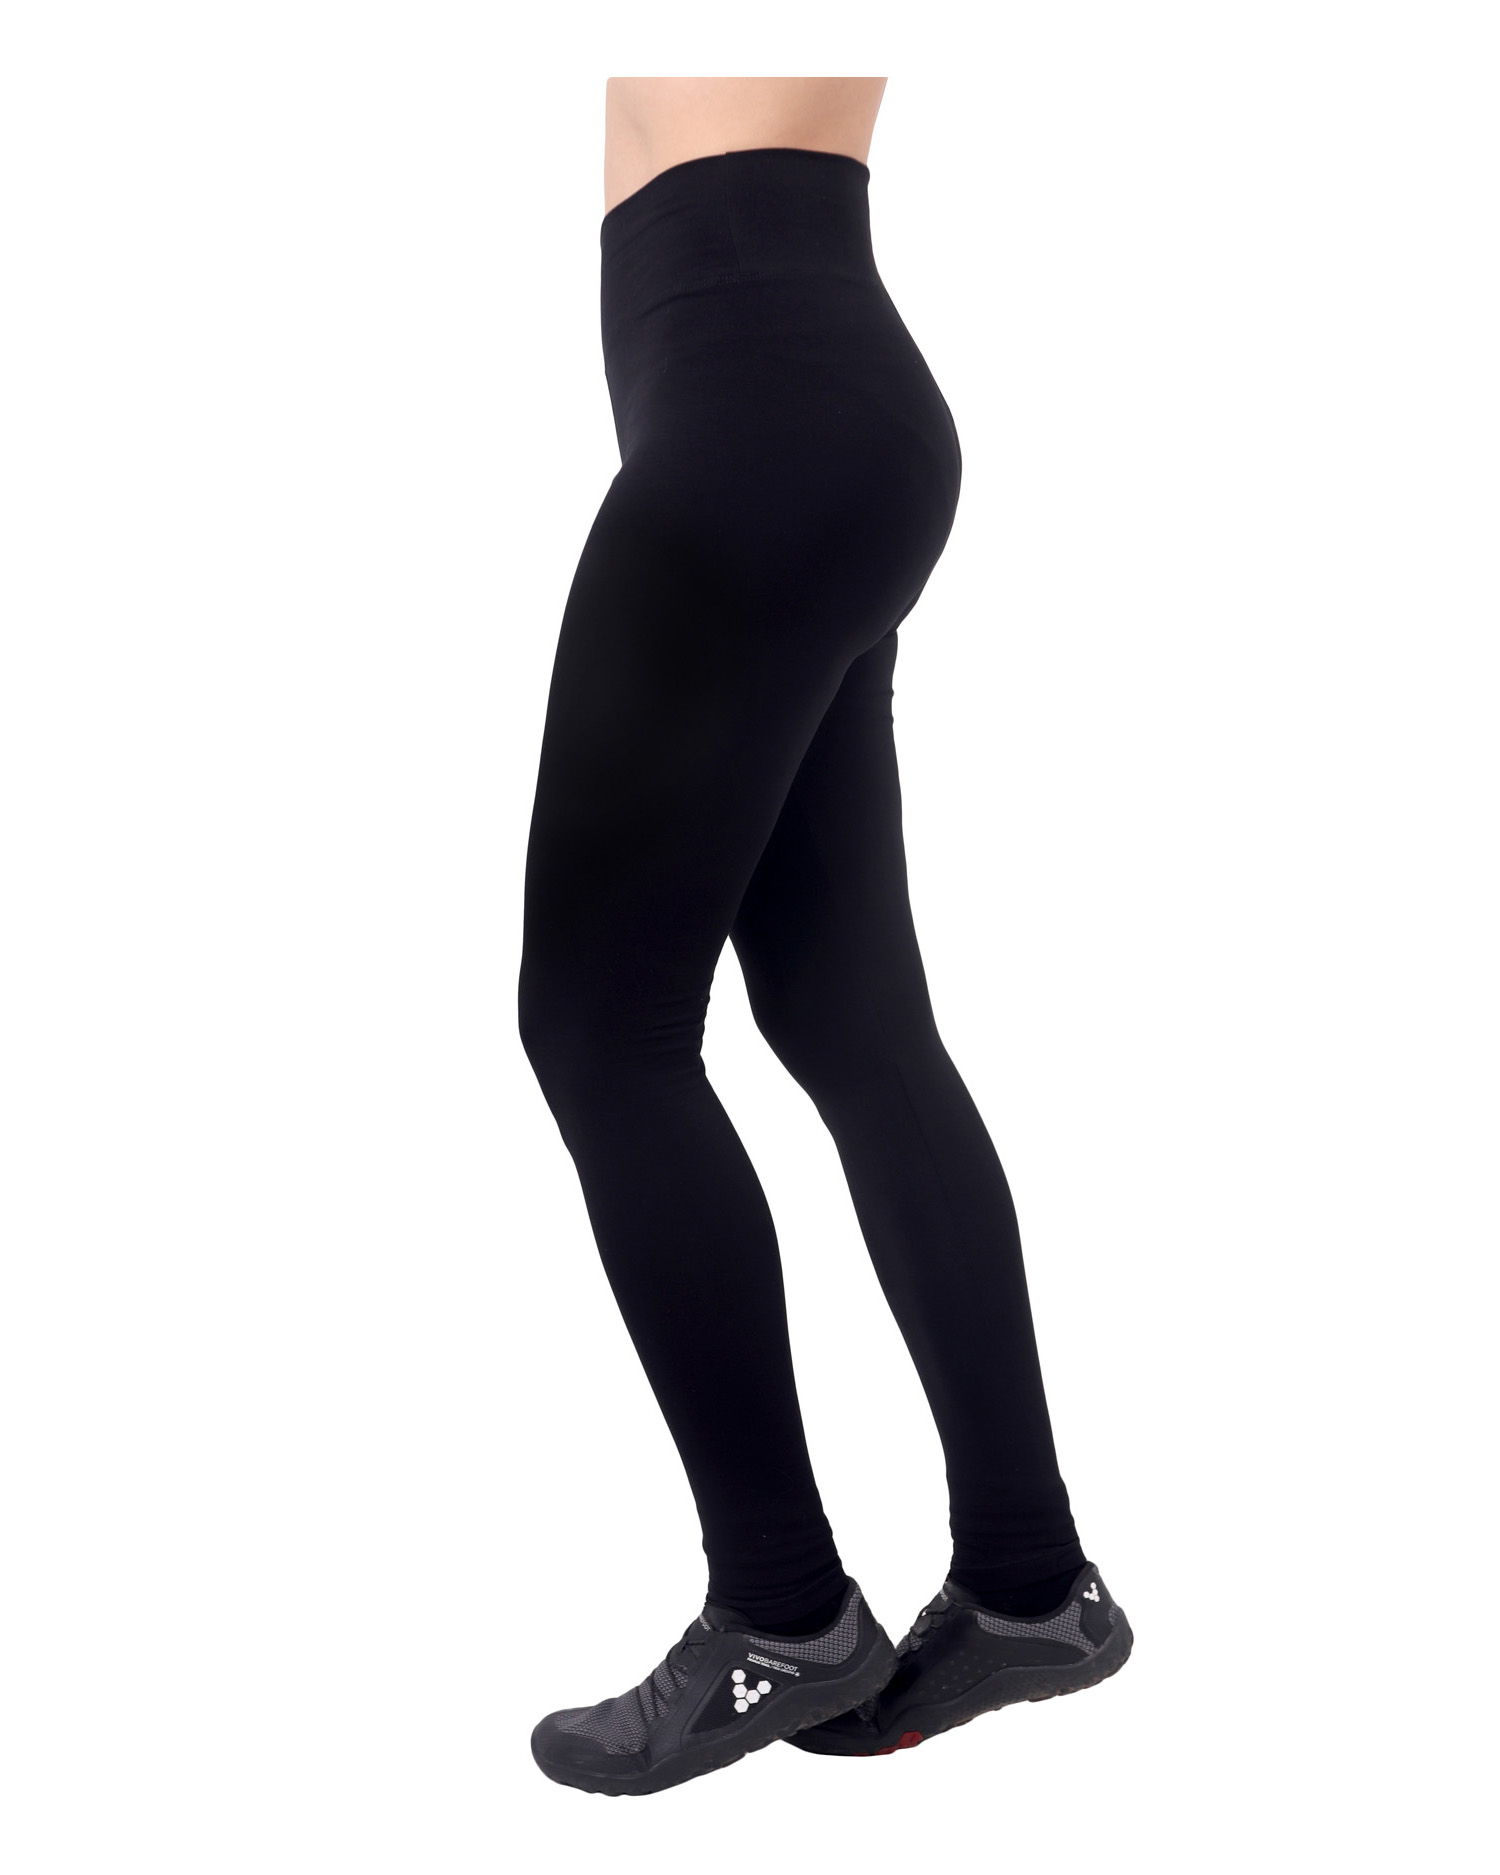 Women's cotton leggings, high waist, NO ELASTIC, black